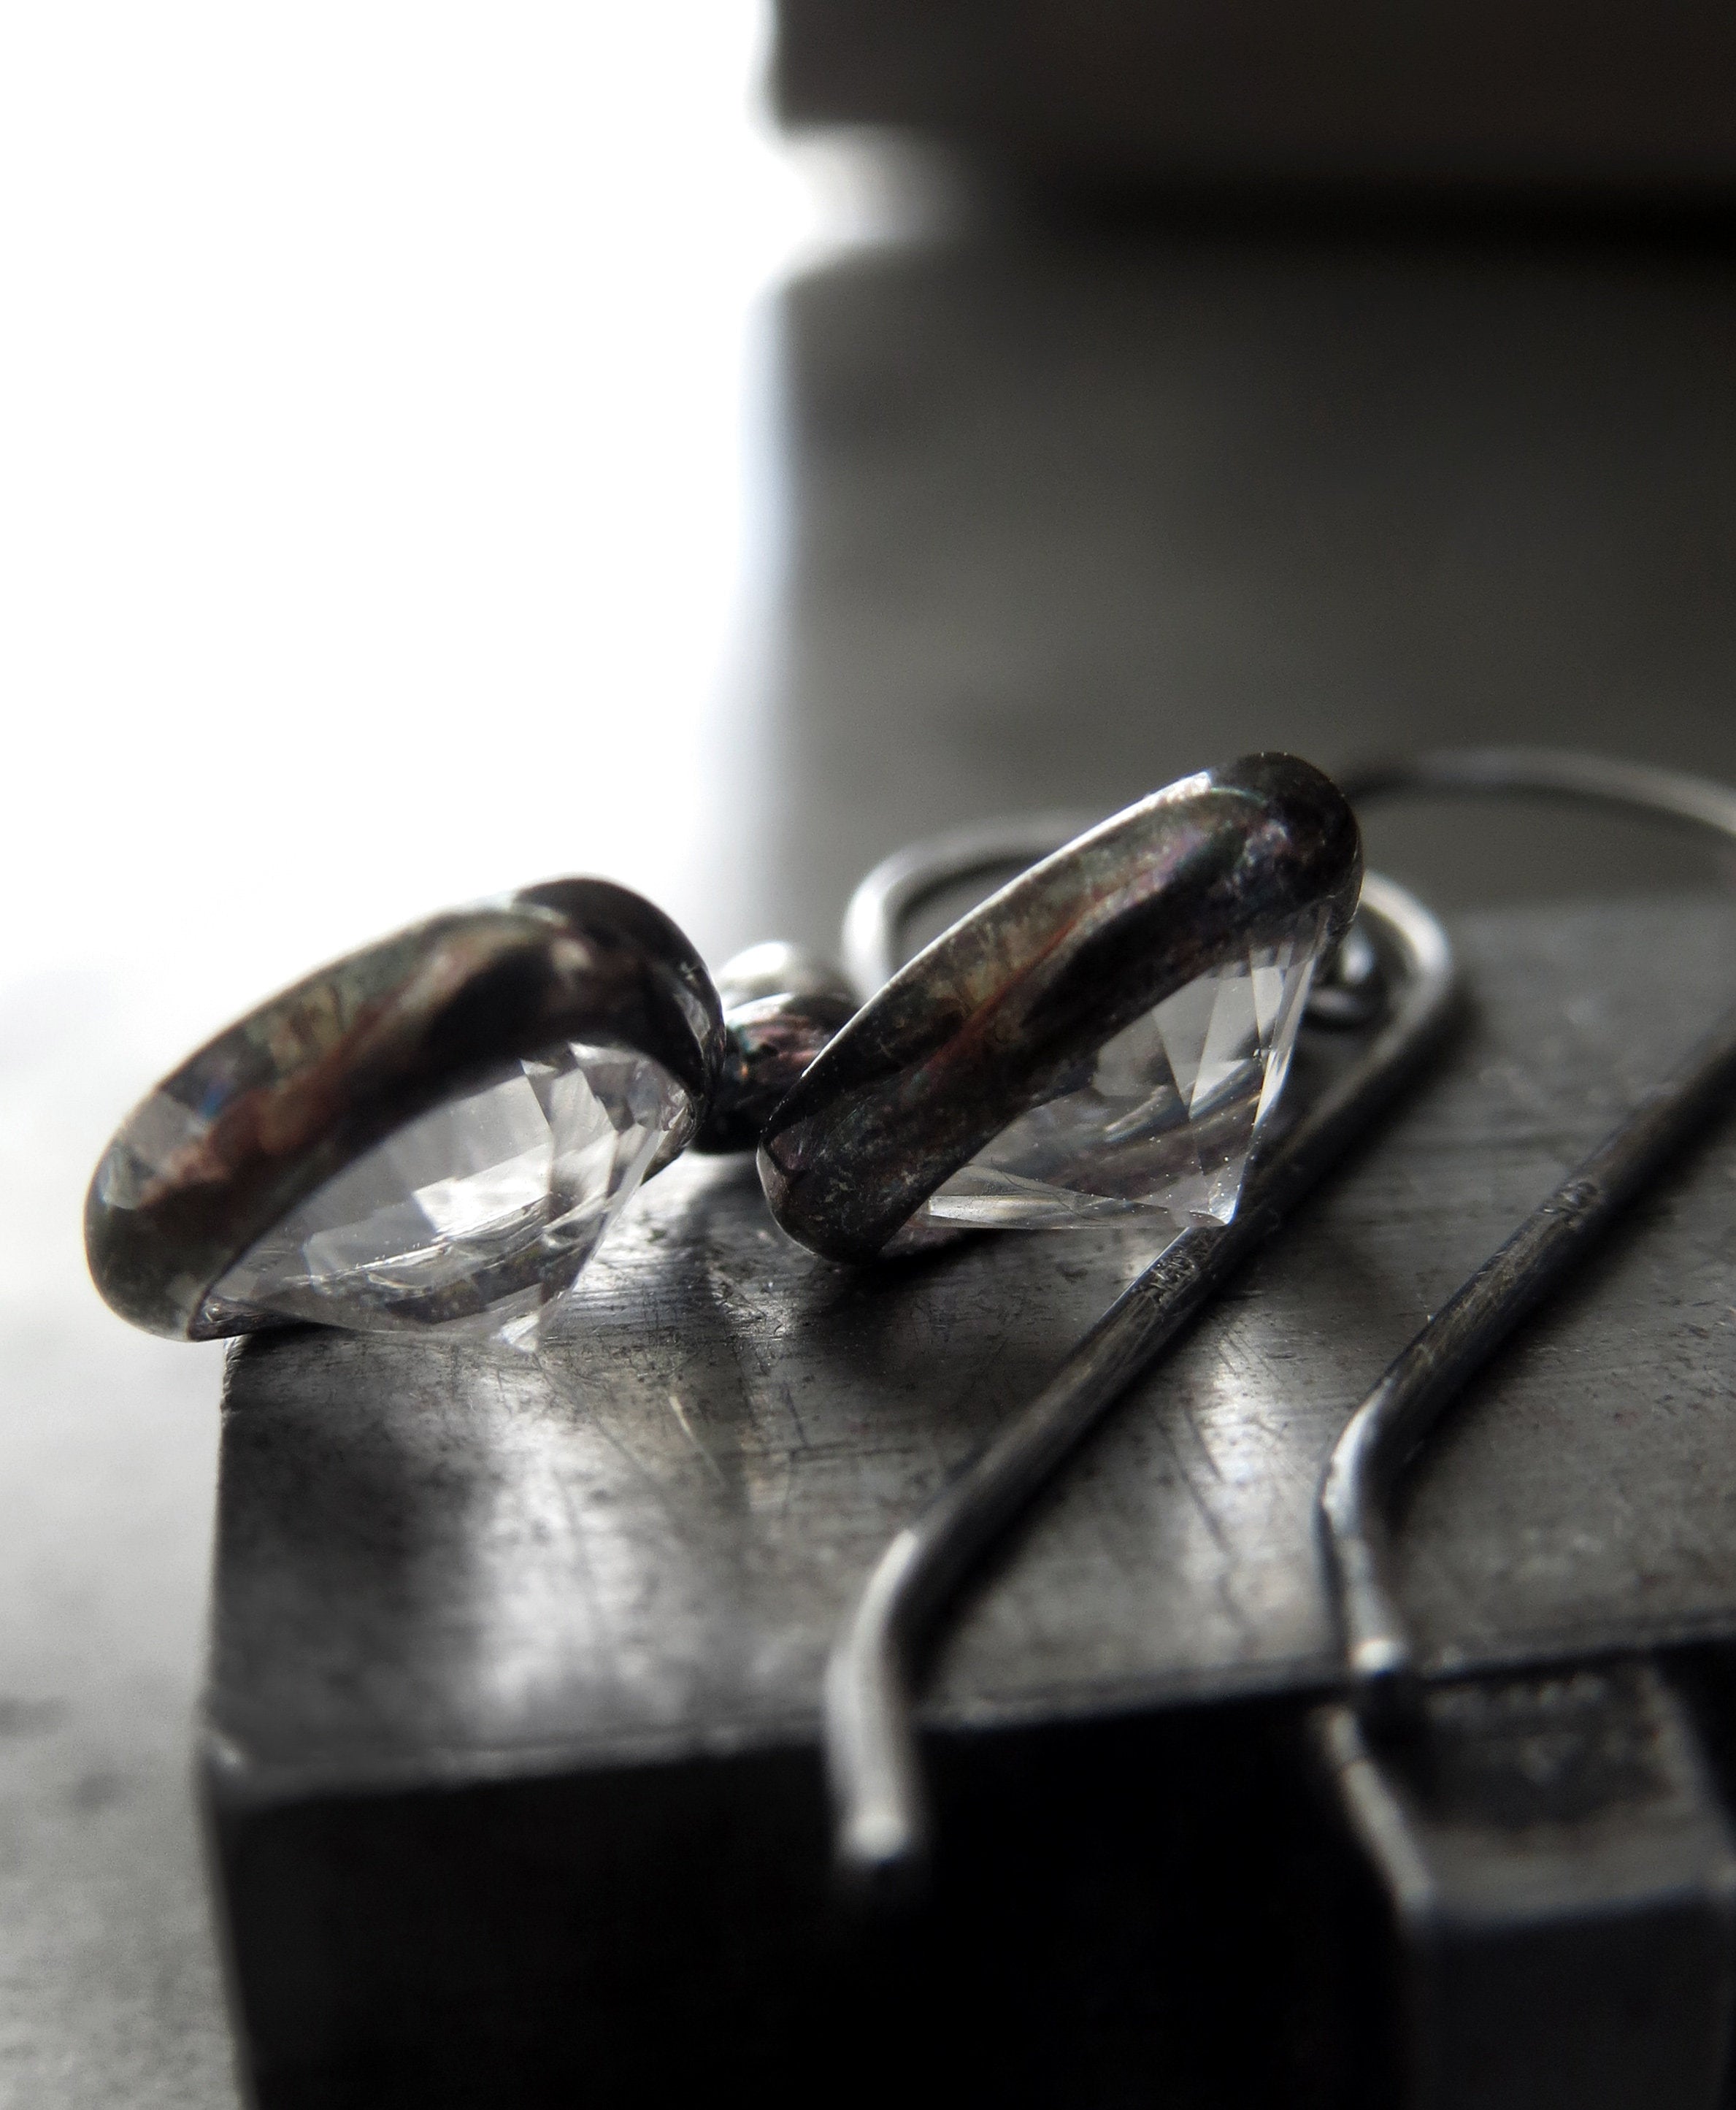 DEMURE - Tiny Clear Glass Faceted Teardrop Earrings with Darkened Silver Bezel Wrap, Small Minimalist Jewelry, Vintage Style Wedding Jewelry